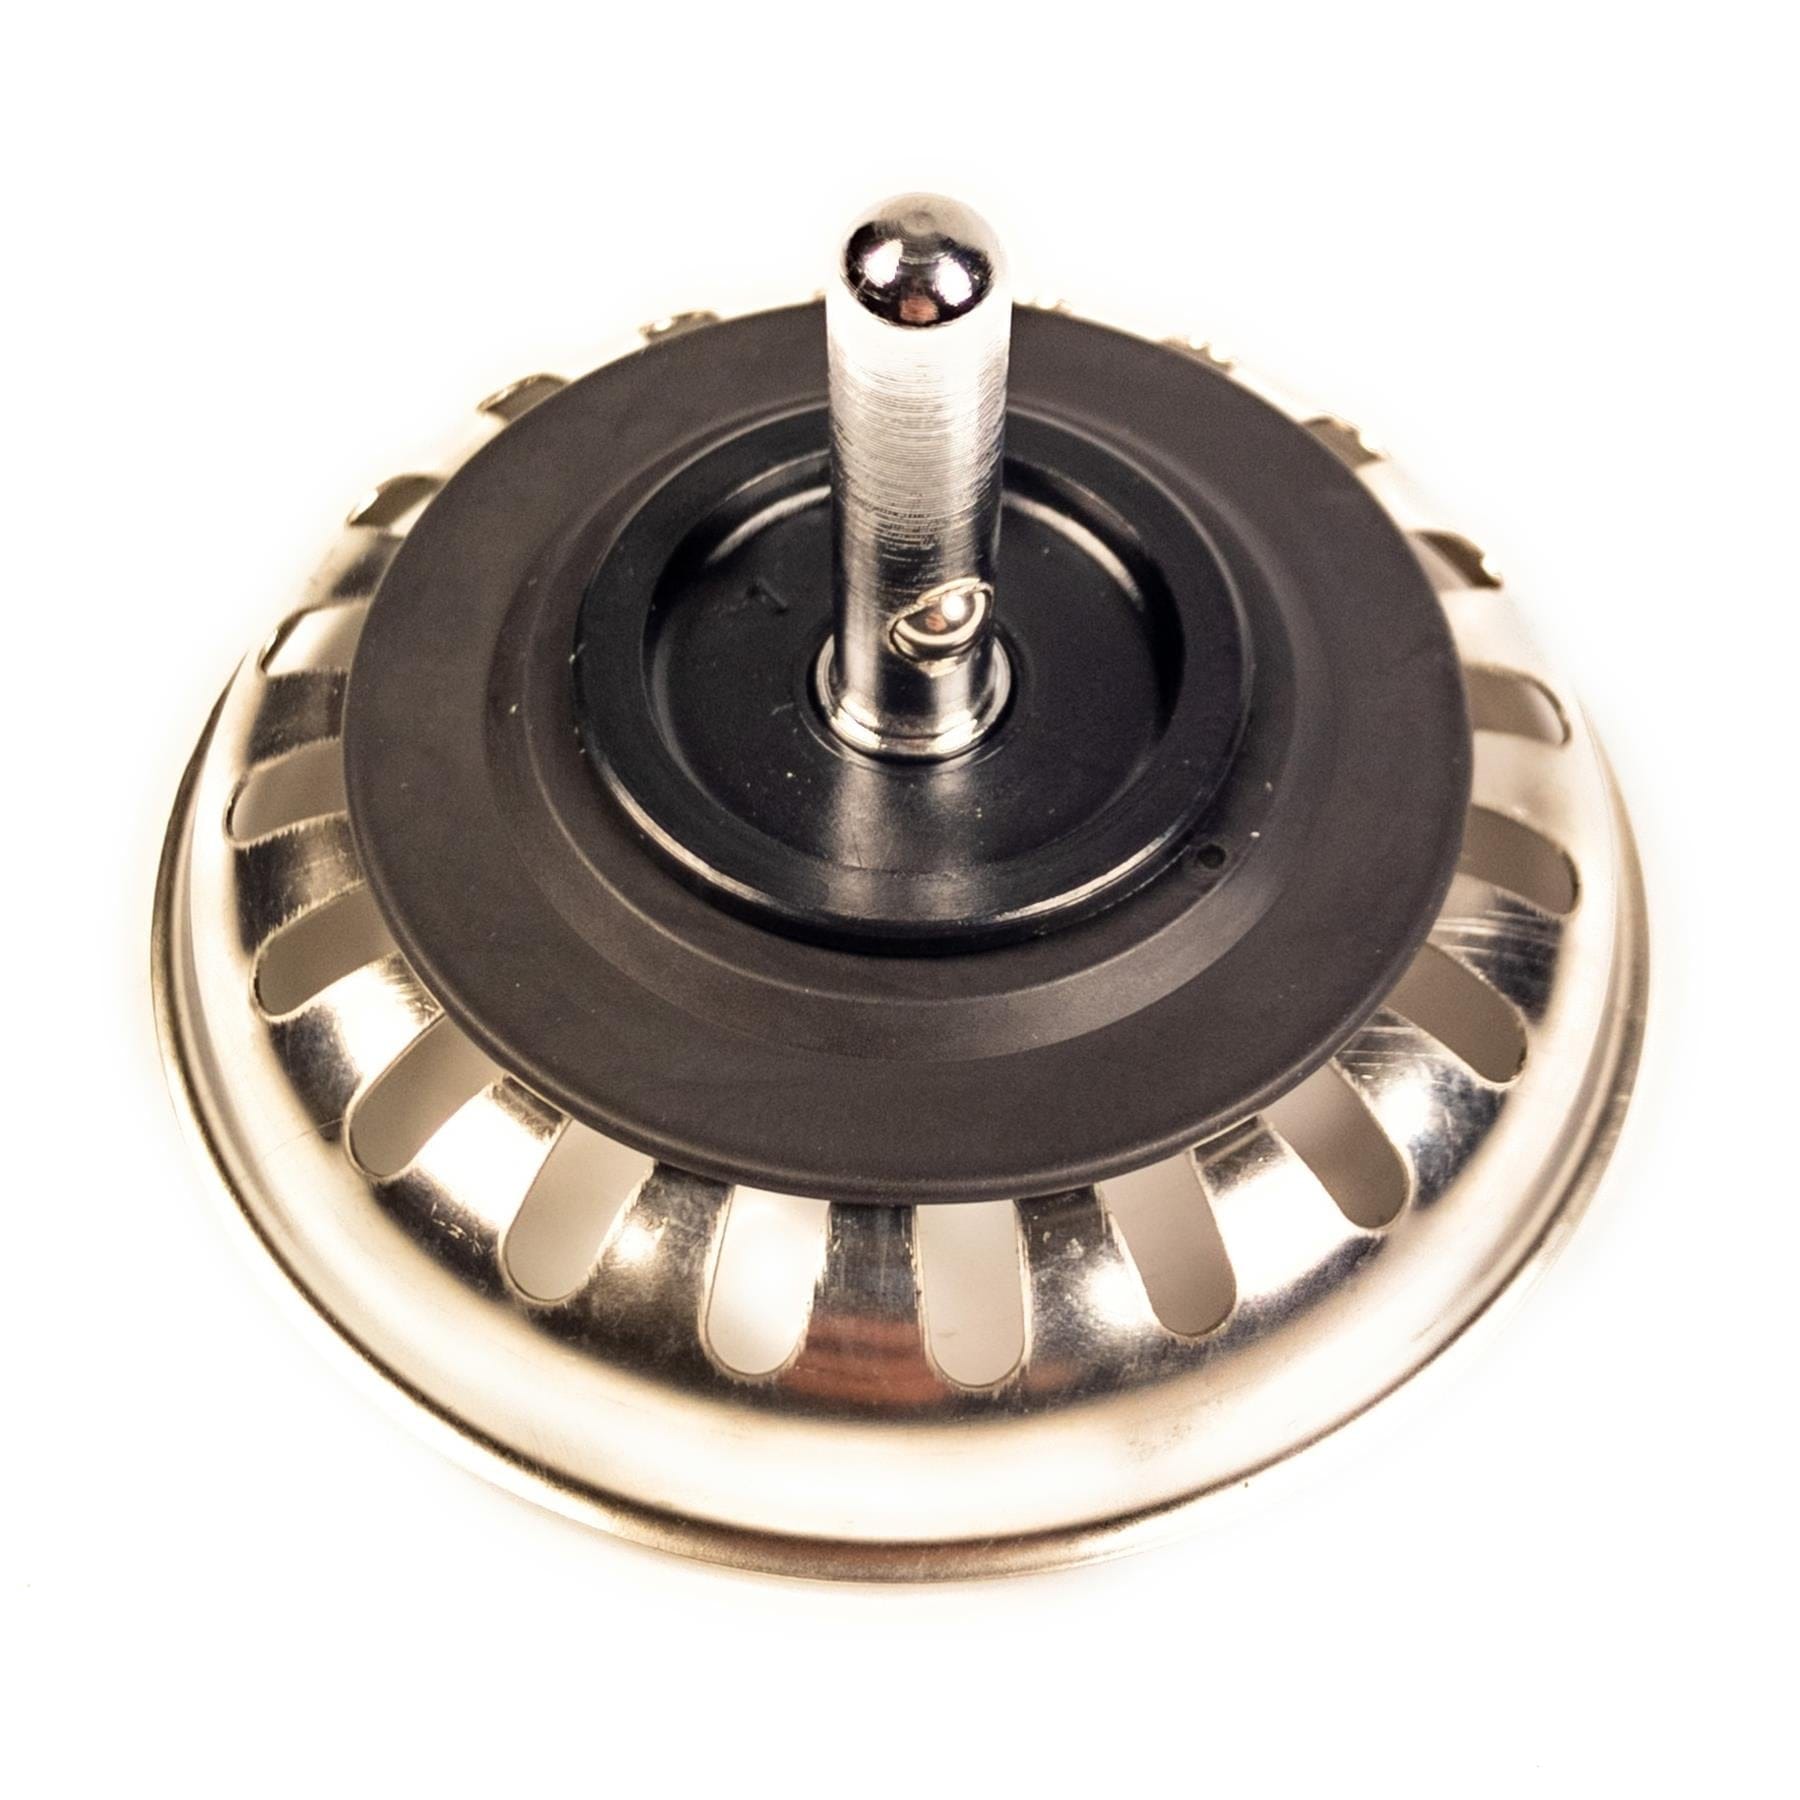 Strainer Plug With Stem 79mm Dia. Sink Basket Waste Stainless Steel Drain Plug Plugs & Strainers McAlpine 100175